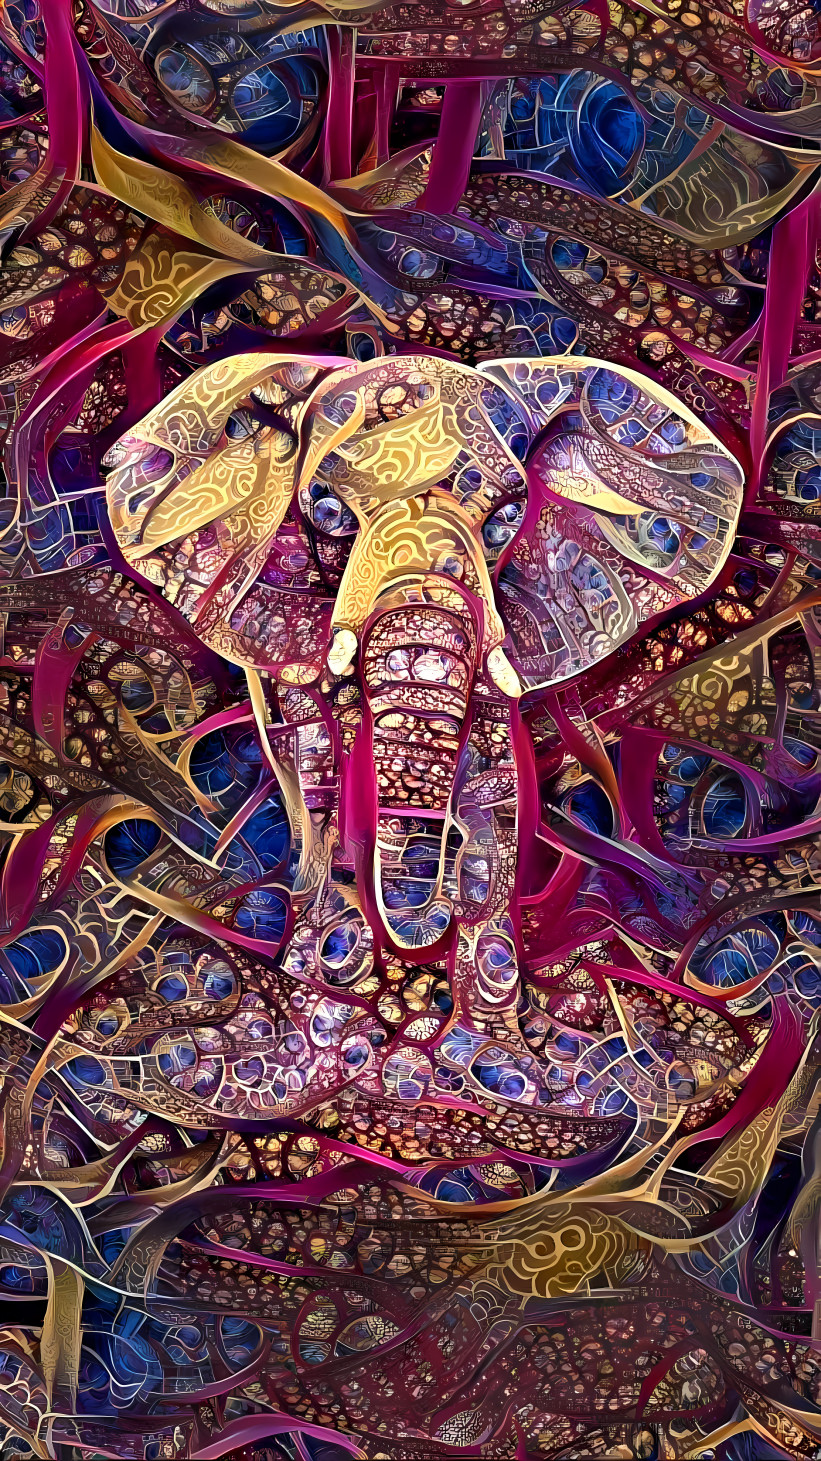 elephant elephant